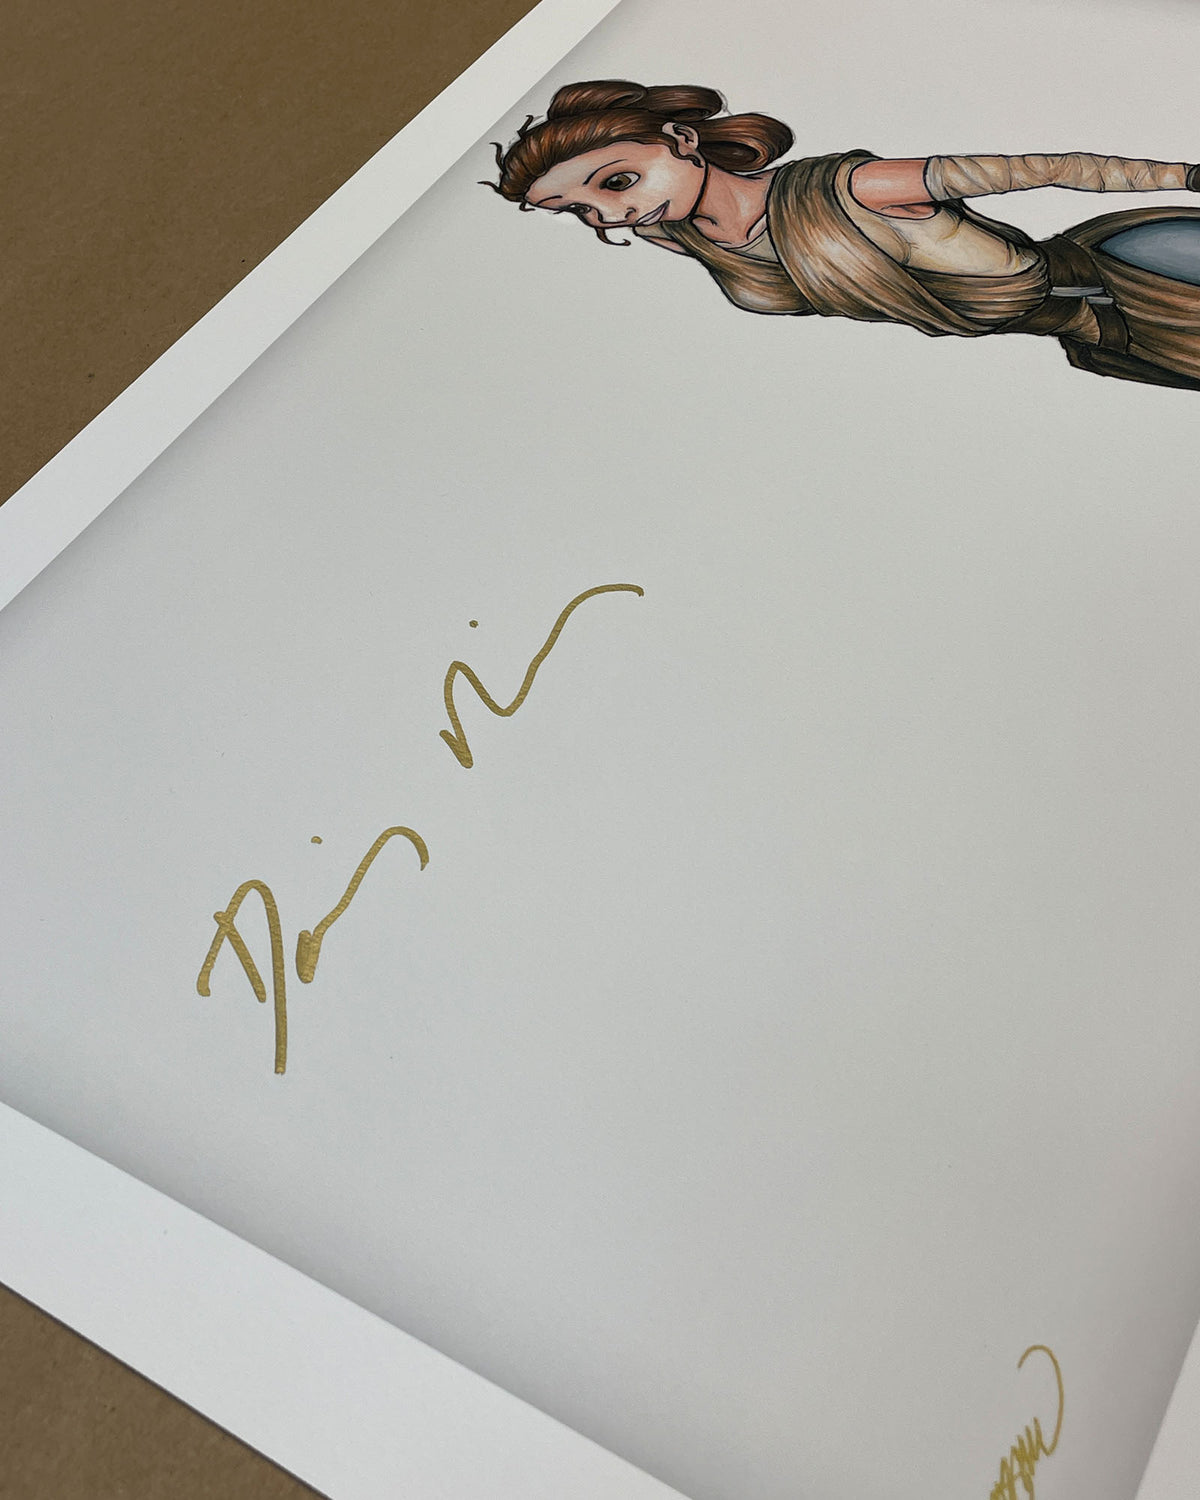 Jakku Jedi Sketch Print - Rey - Daisy Ridley Autographed (Authenticated)